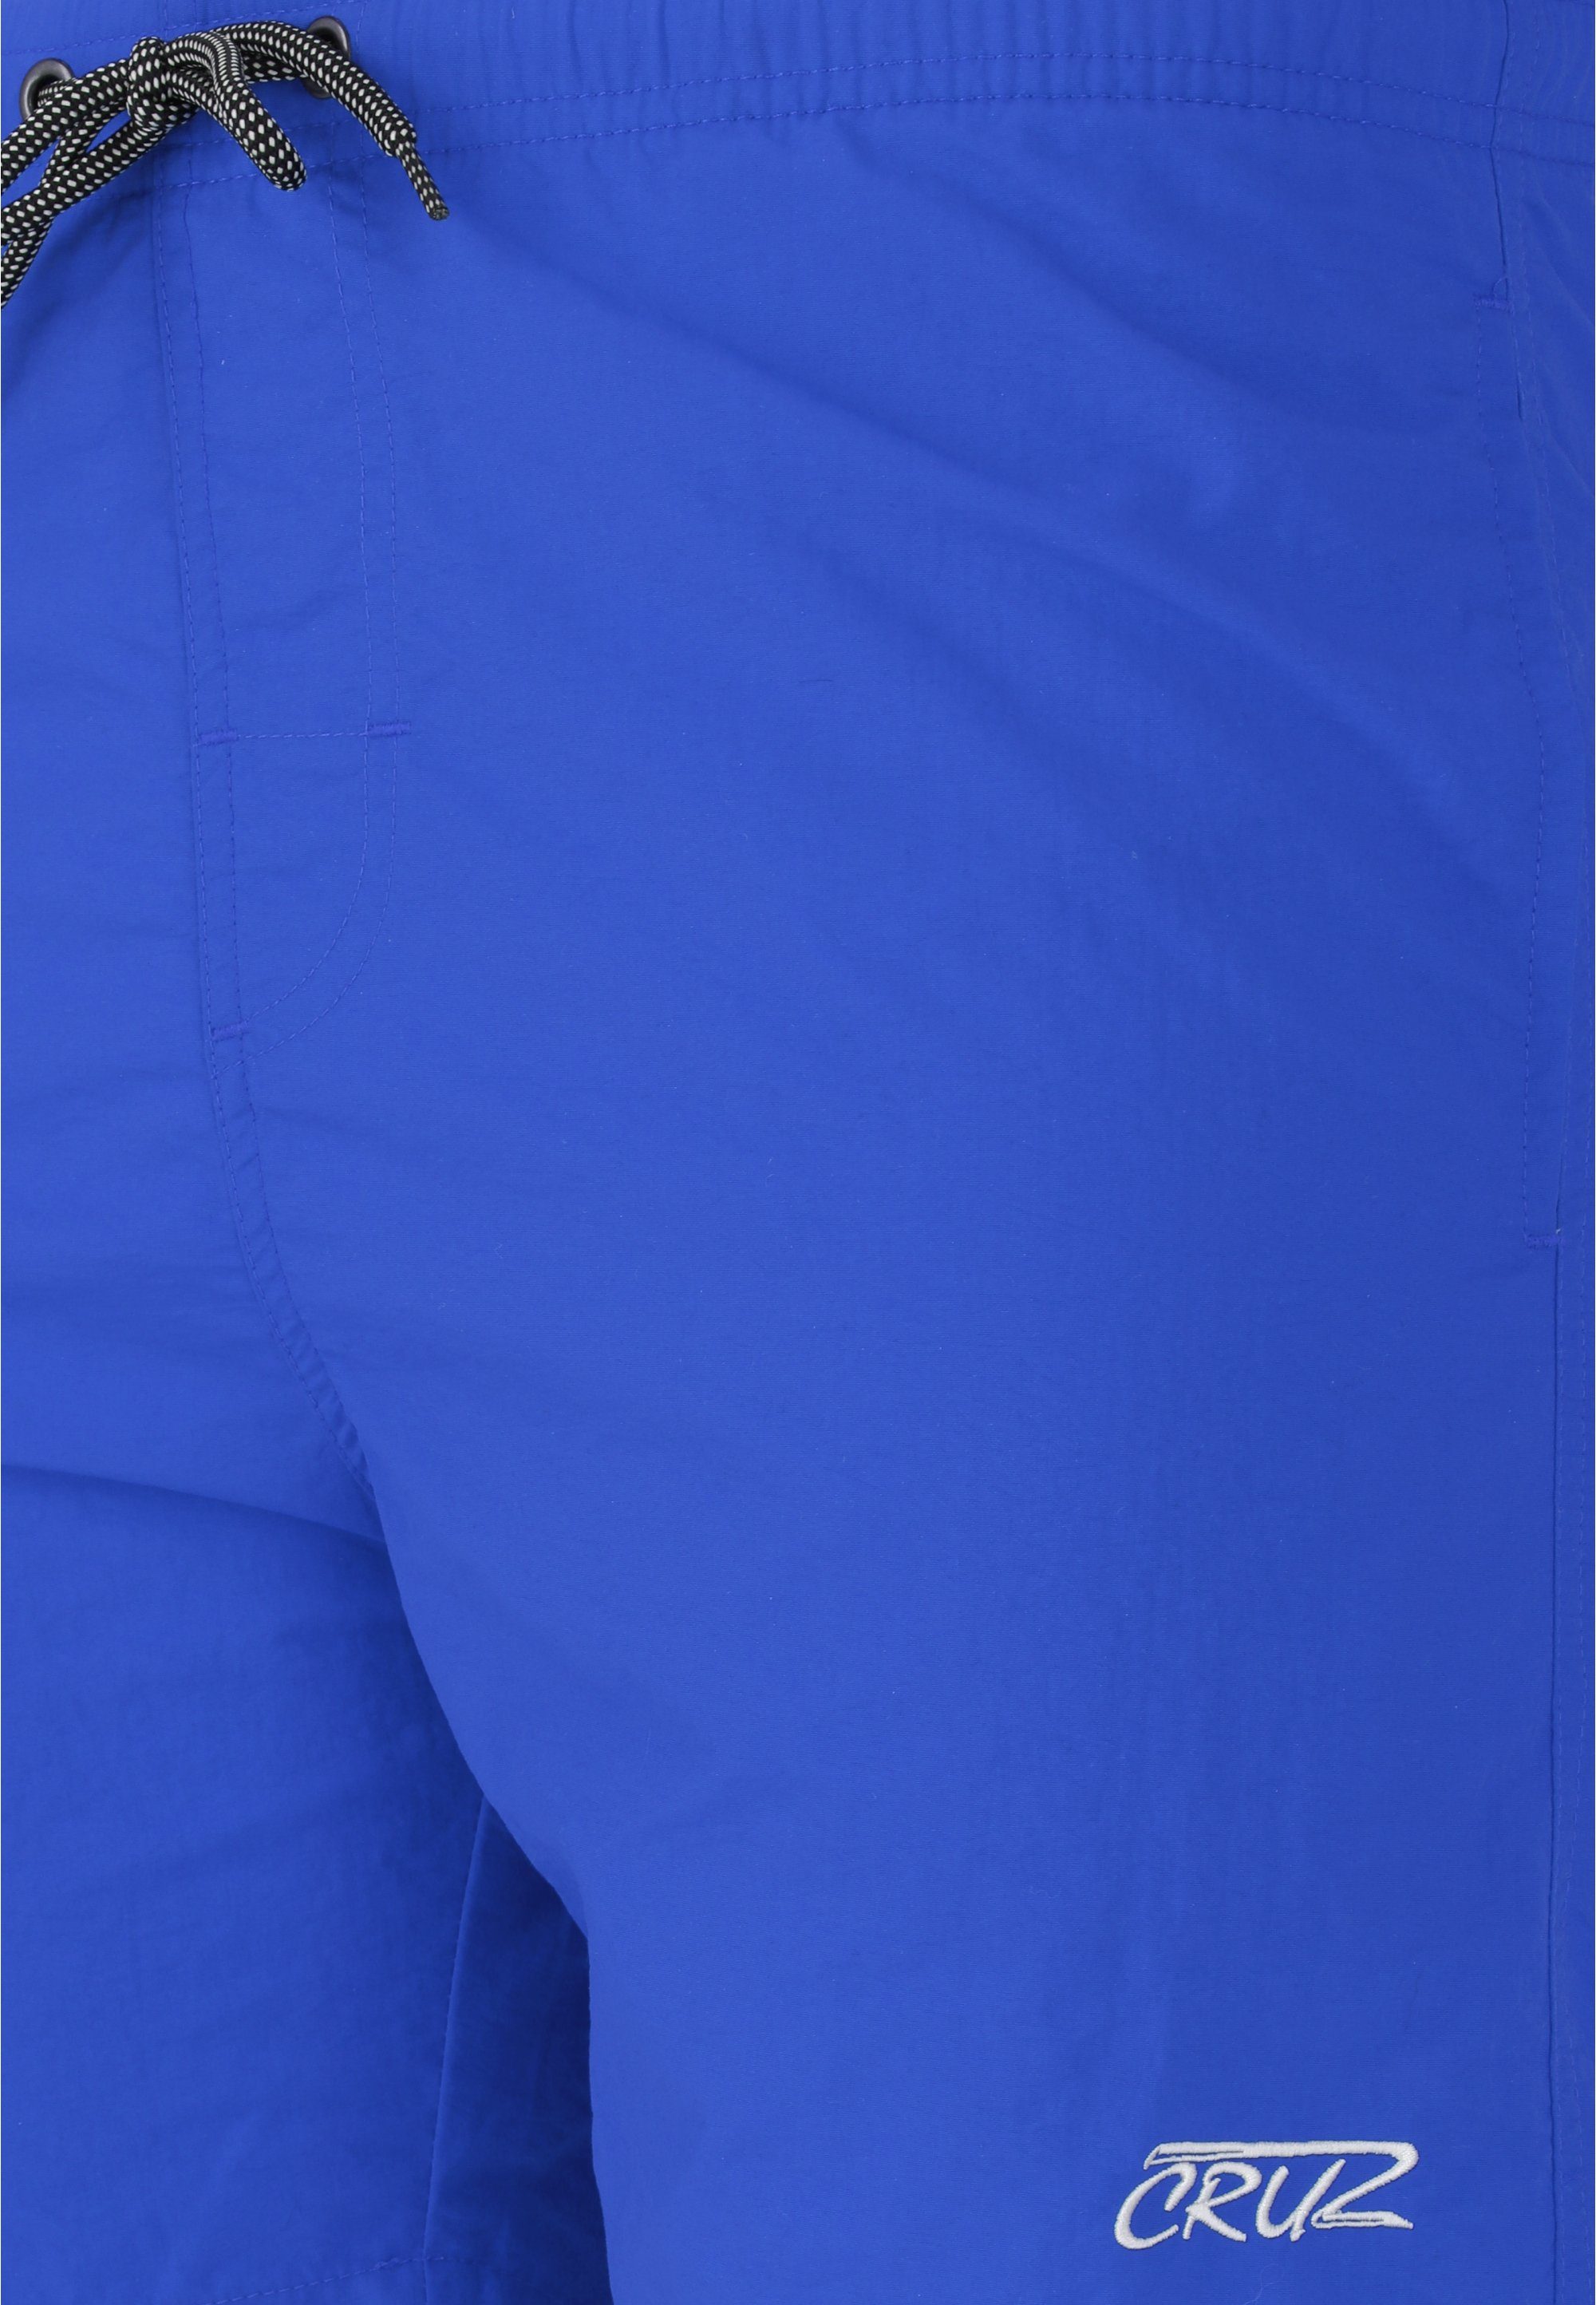 CRUZ Badehose Clemont in klassischem Design blau